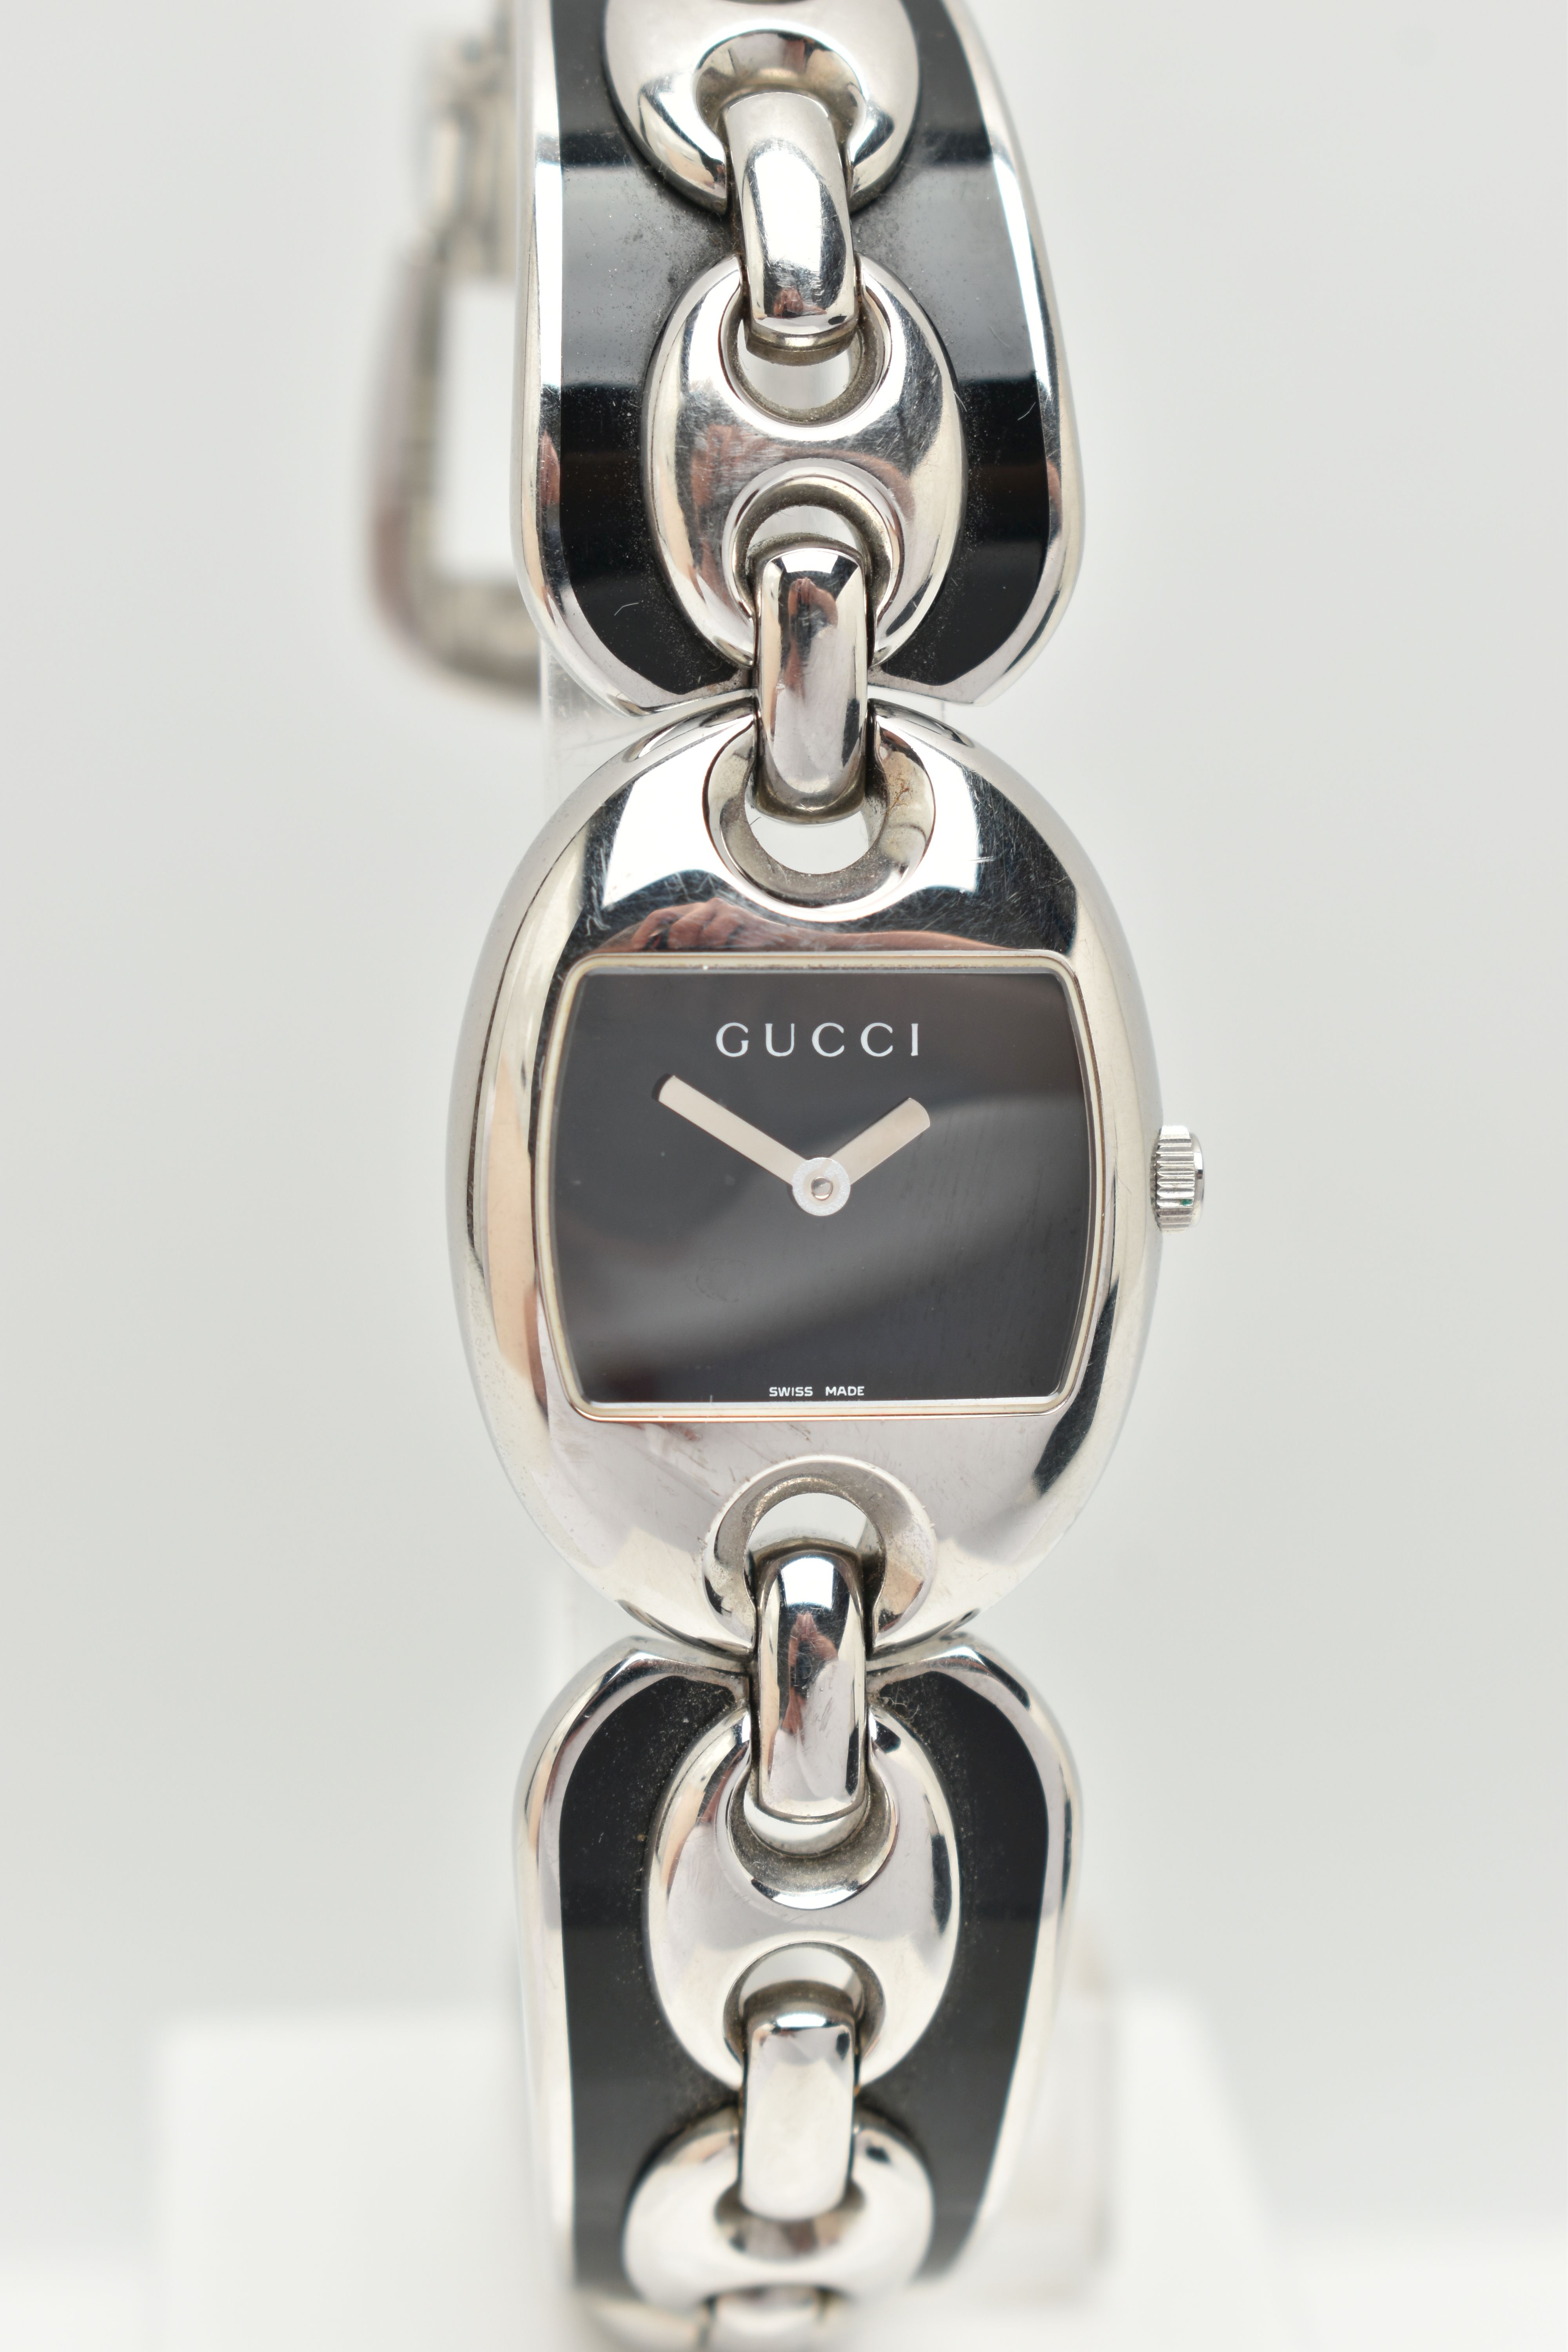 A 'GUCCI' MARINA CHAIN WRISTWATCH, quartz movement, rectangular black dial signed 'Gucci', oval